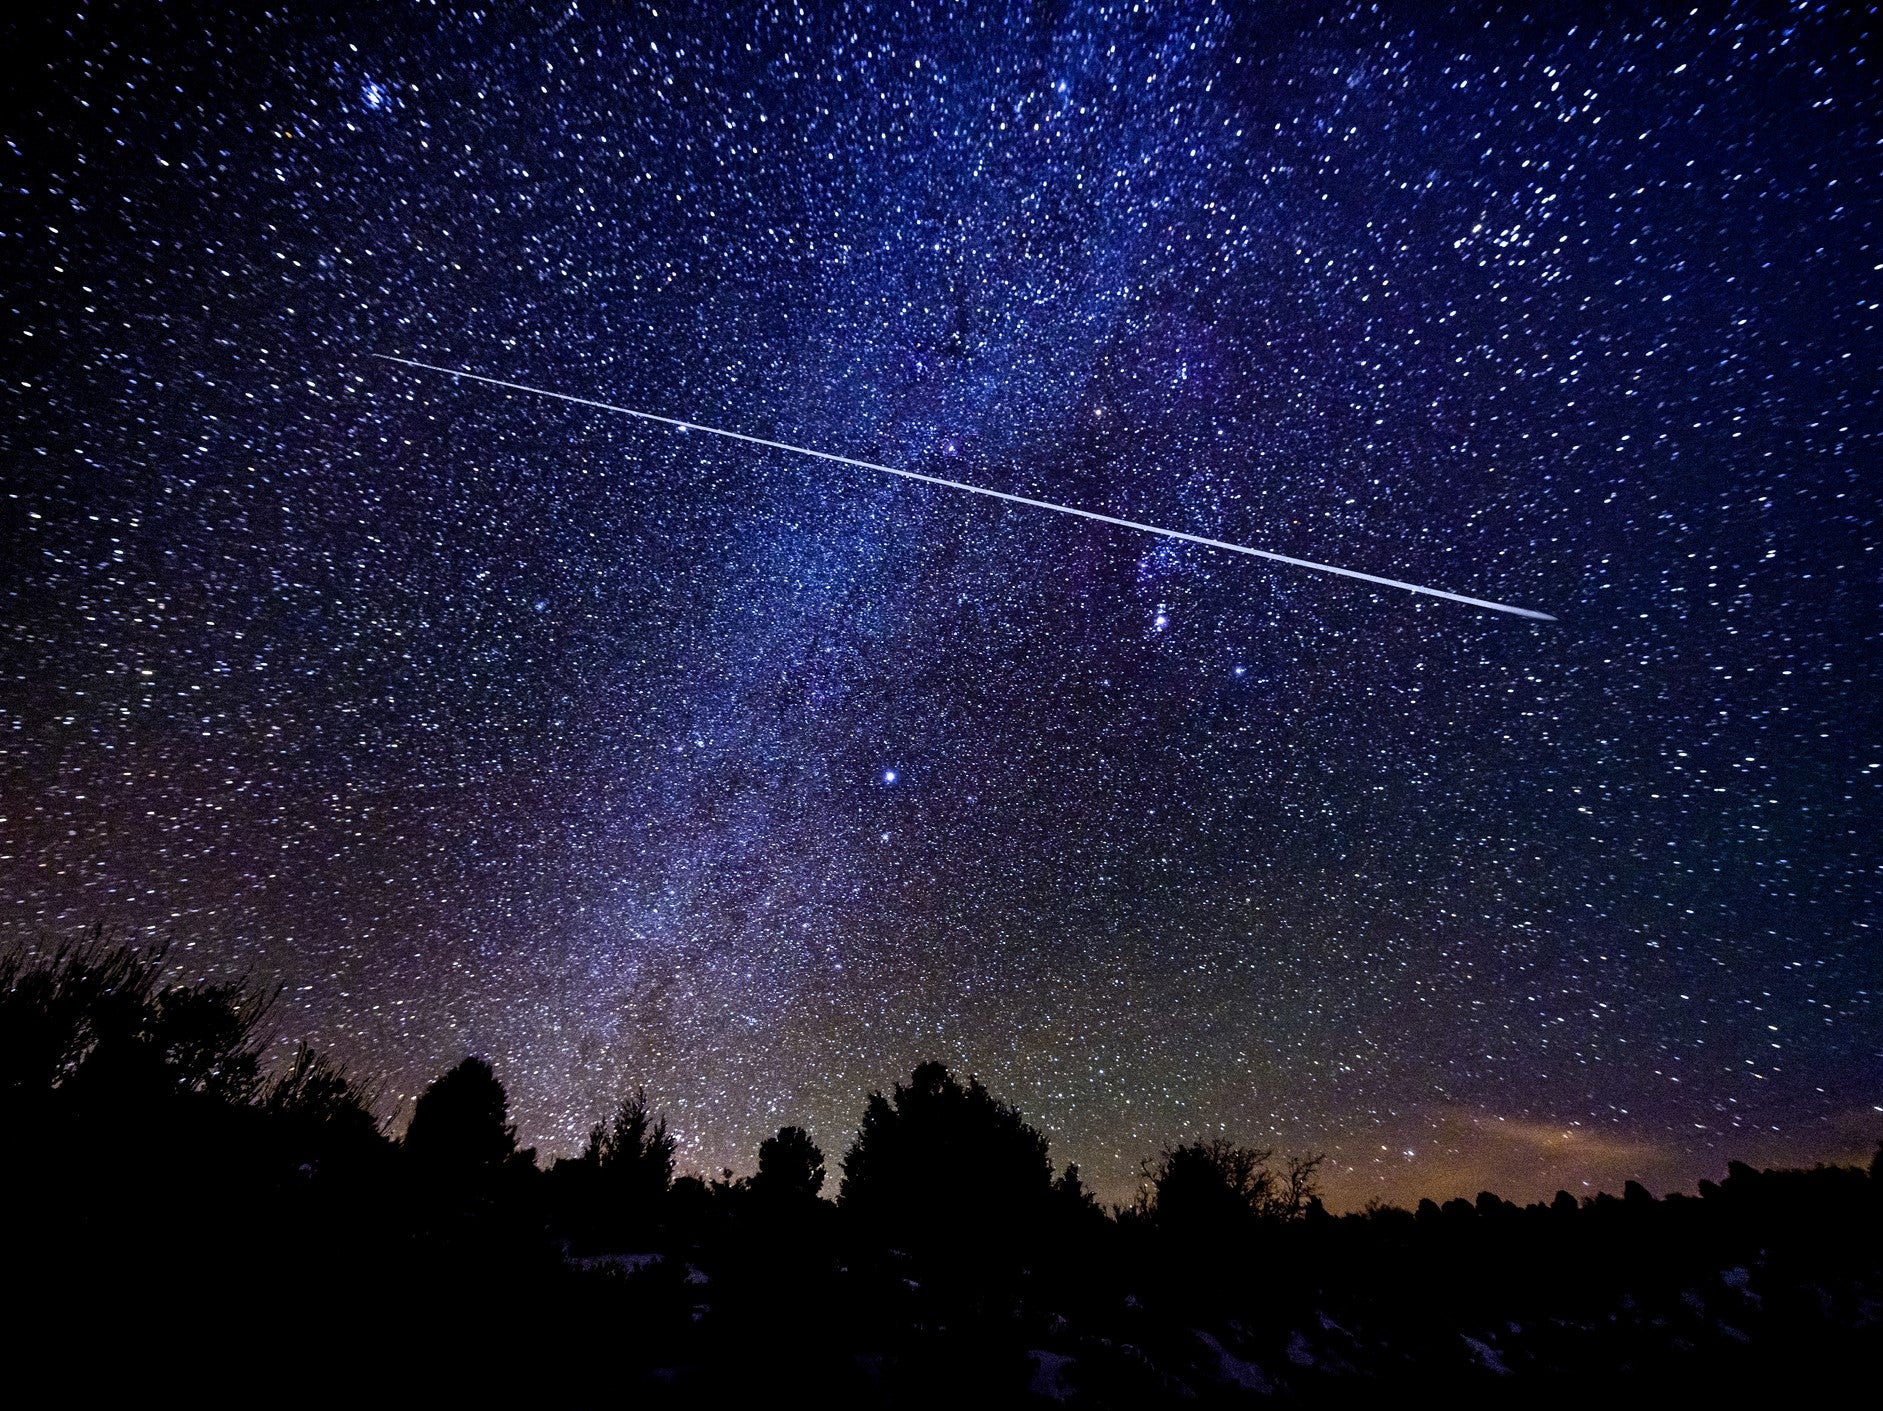 Diciembre de 2020 verá dos lluvias de meteoritos&nbsp;